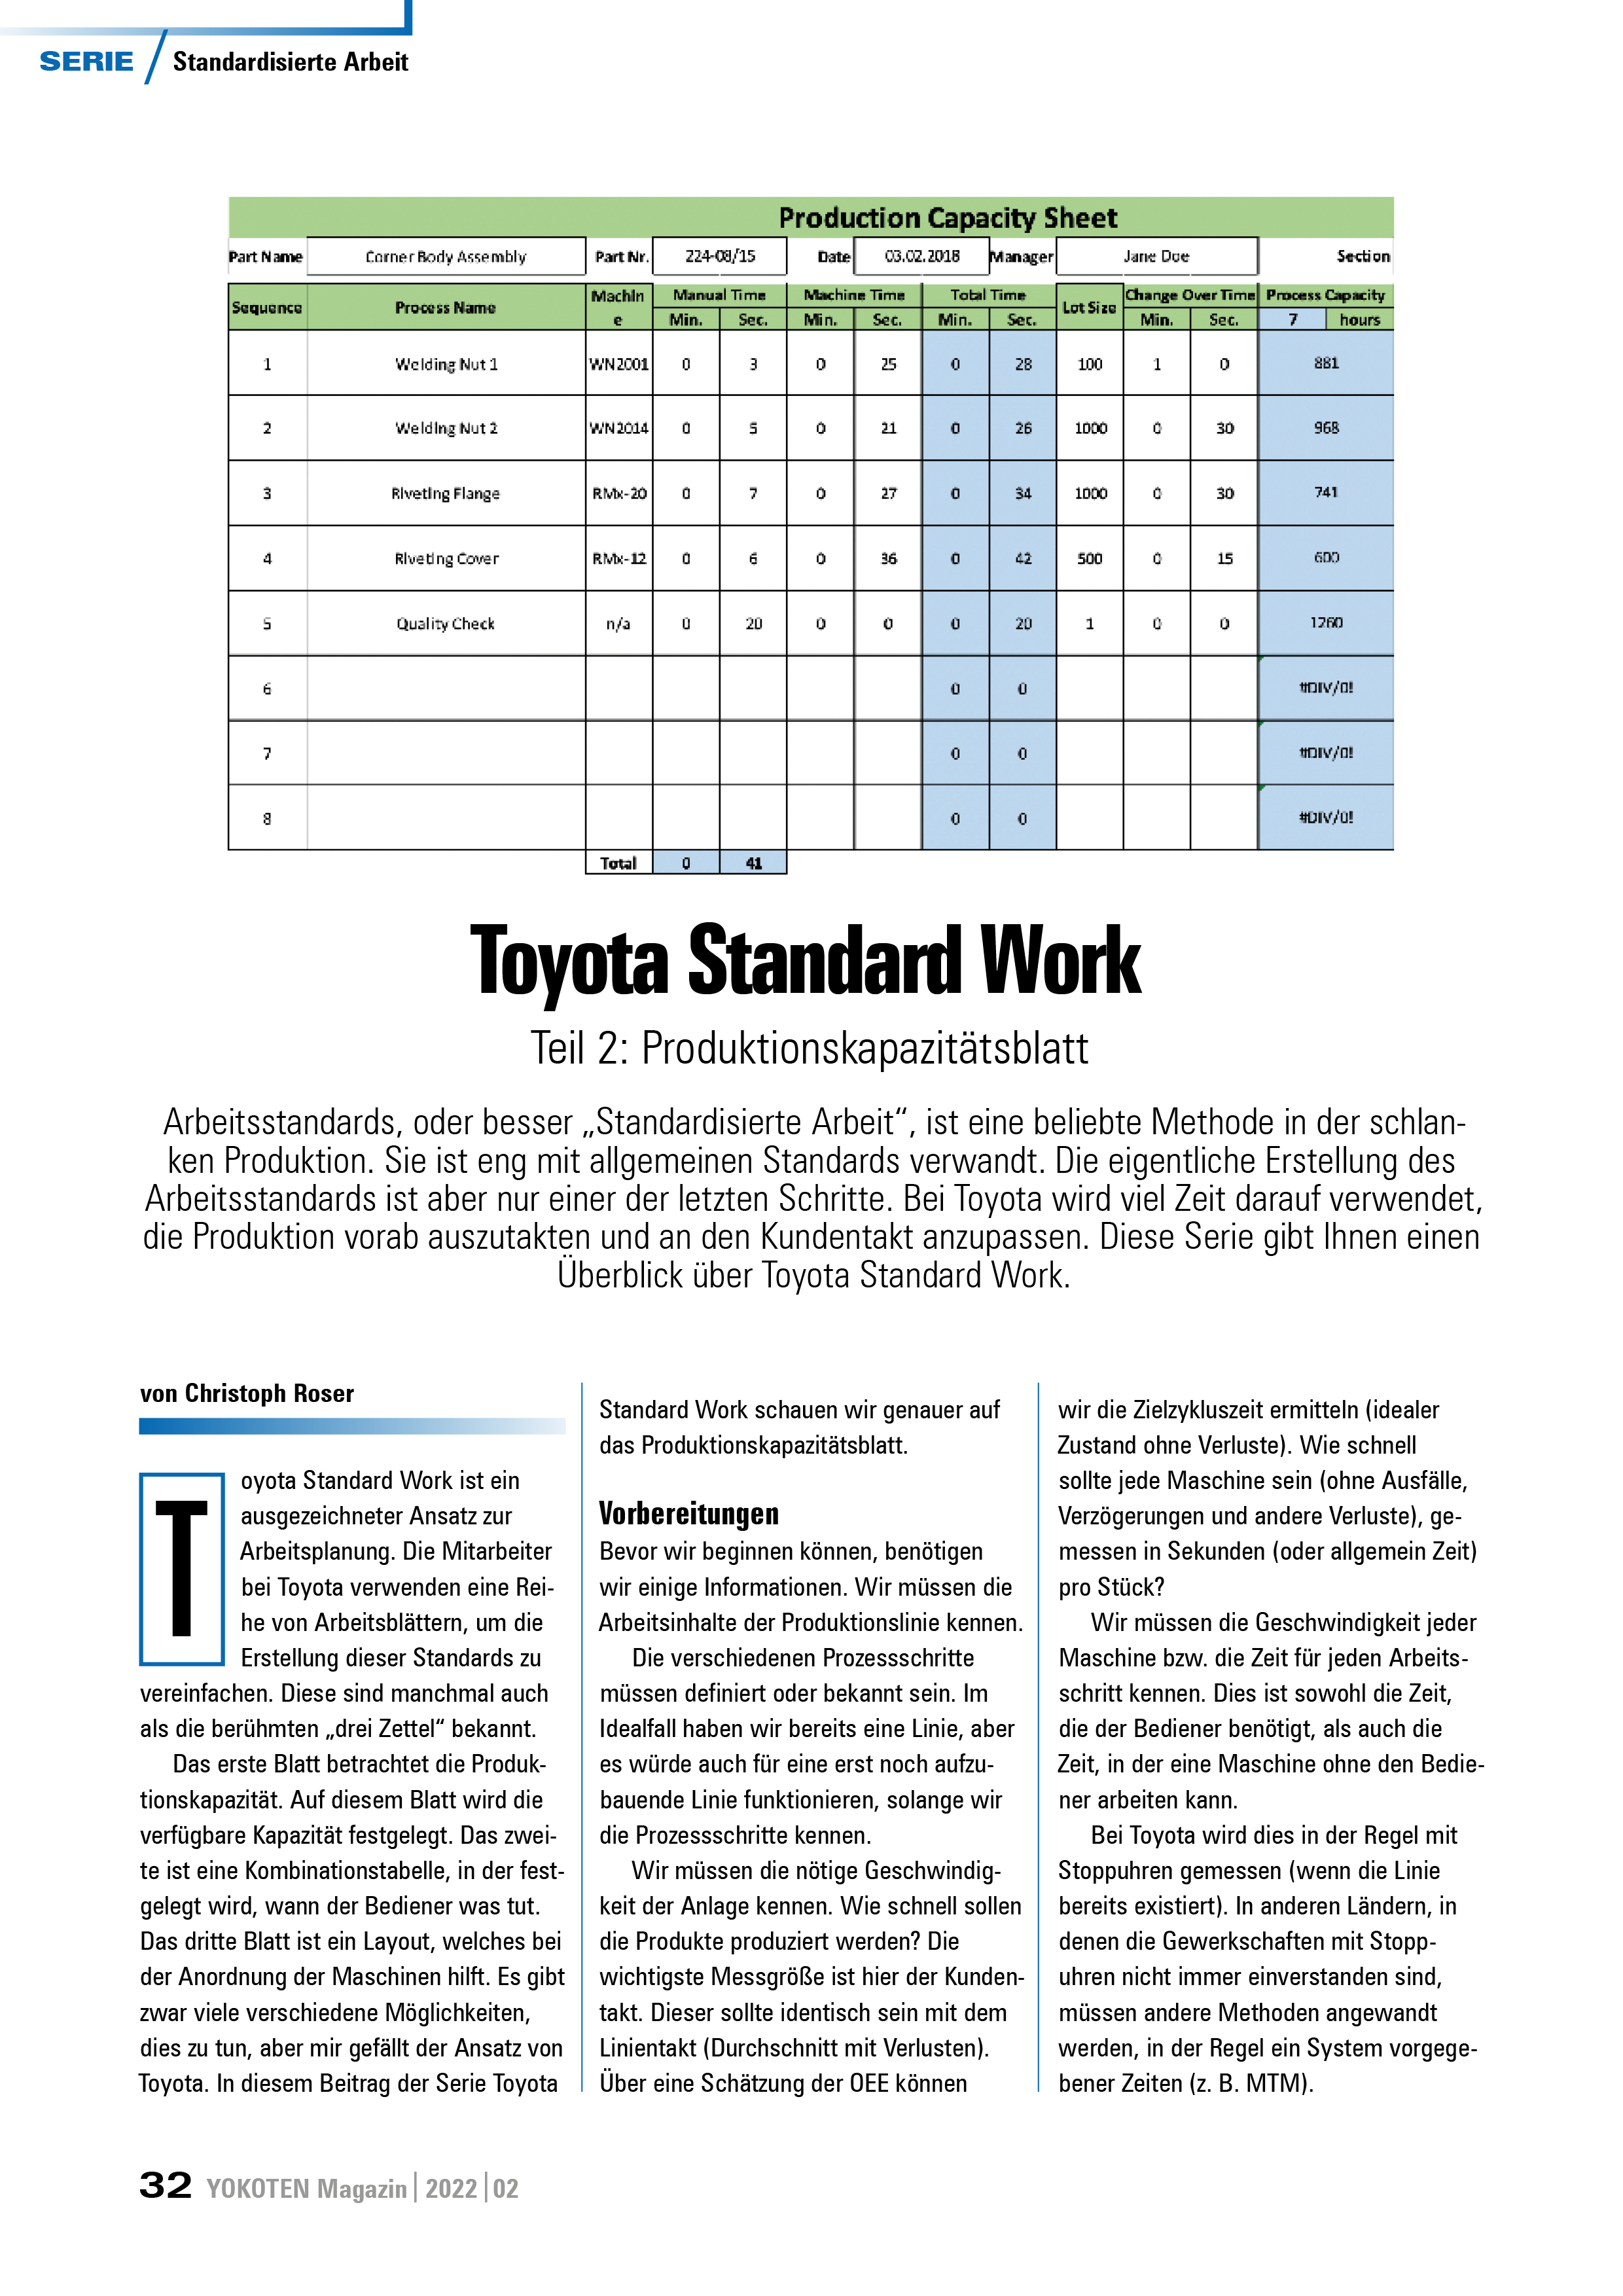 YOKOTEN-Artikel: Toyota Standard Work